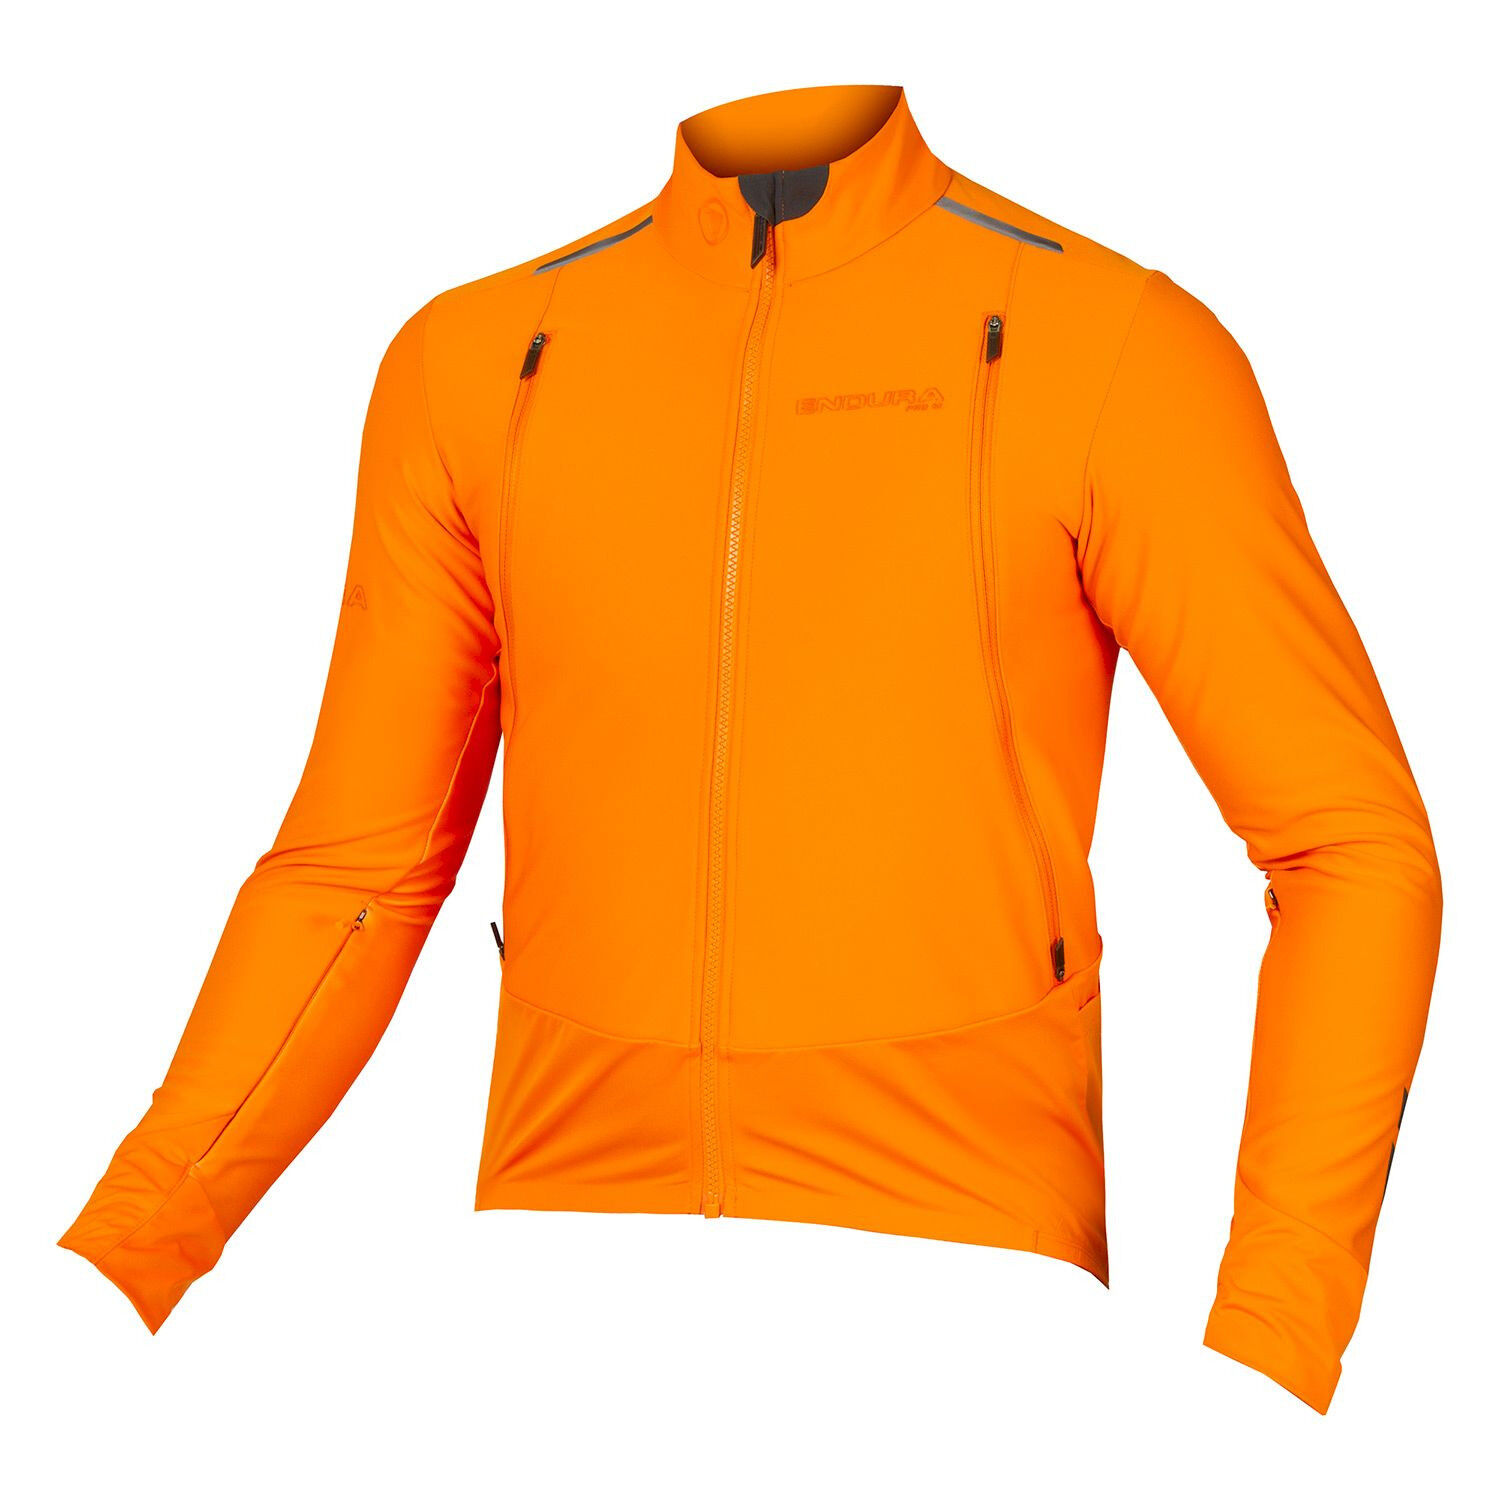 Endura Pro SL 3-Season Jacket - Cycling jacket - Men's